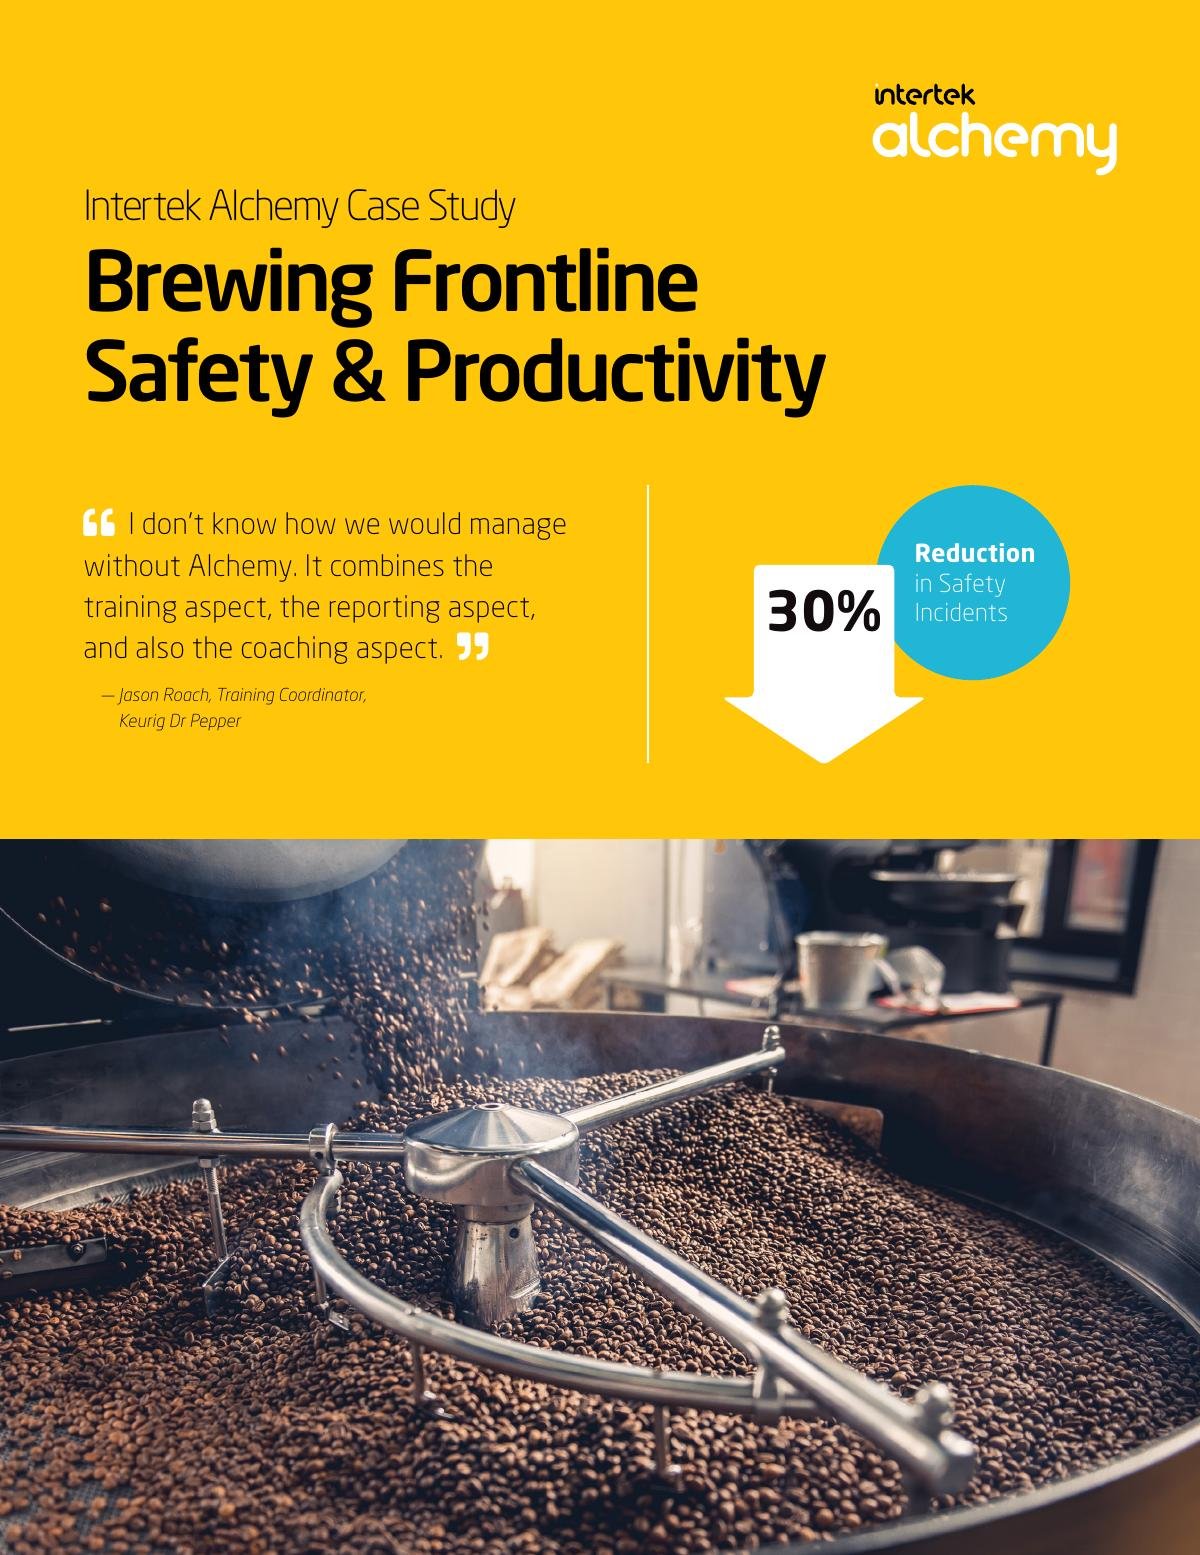 Intertek Alchemy & Keurig Dr Pepper - Brewing Frontline Safety & Productivity